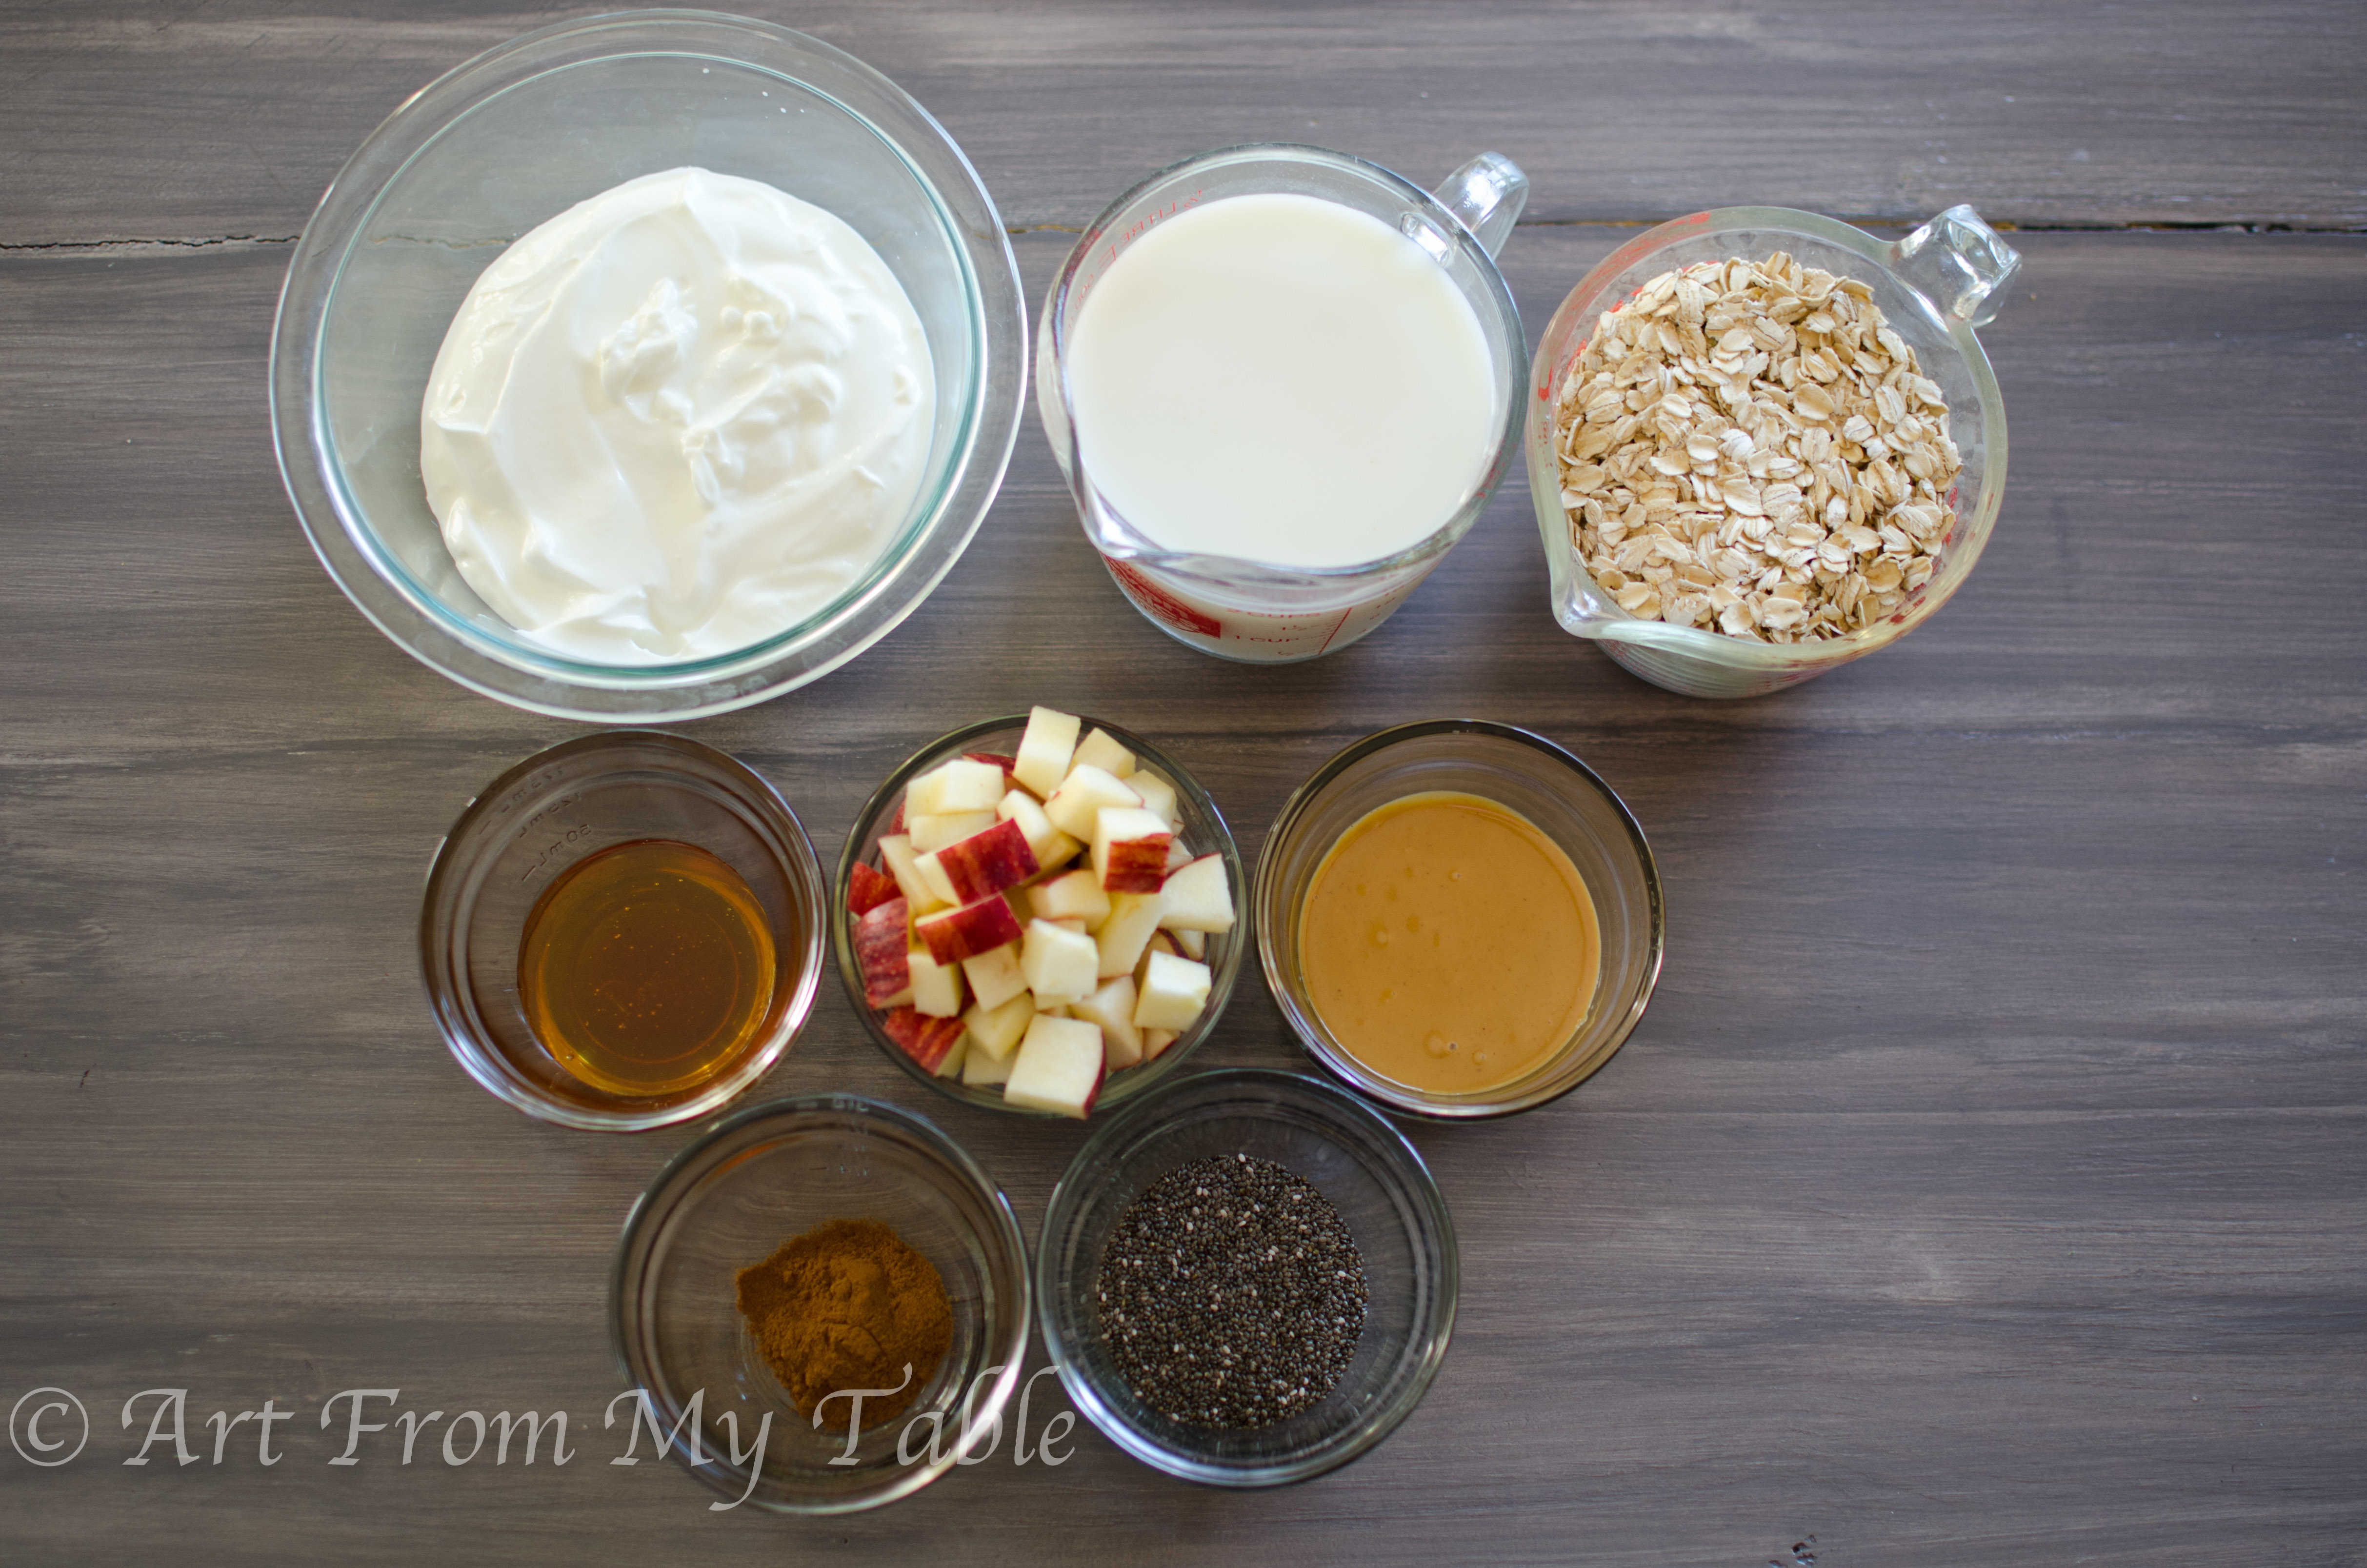 Ingredients for Overnight oats: Yogurt, milk, oats, honey, peanut butter, chia seeds, apples, cinnamon.